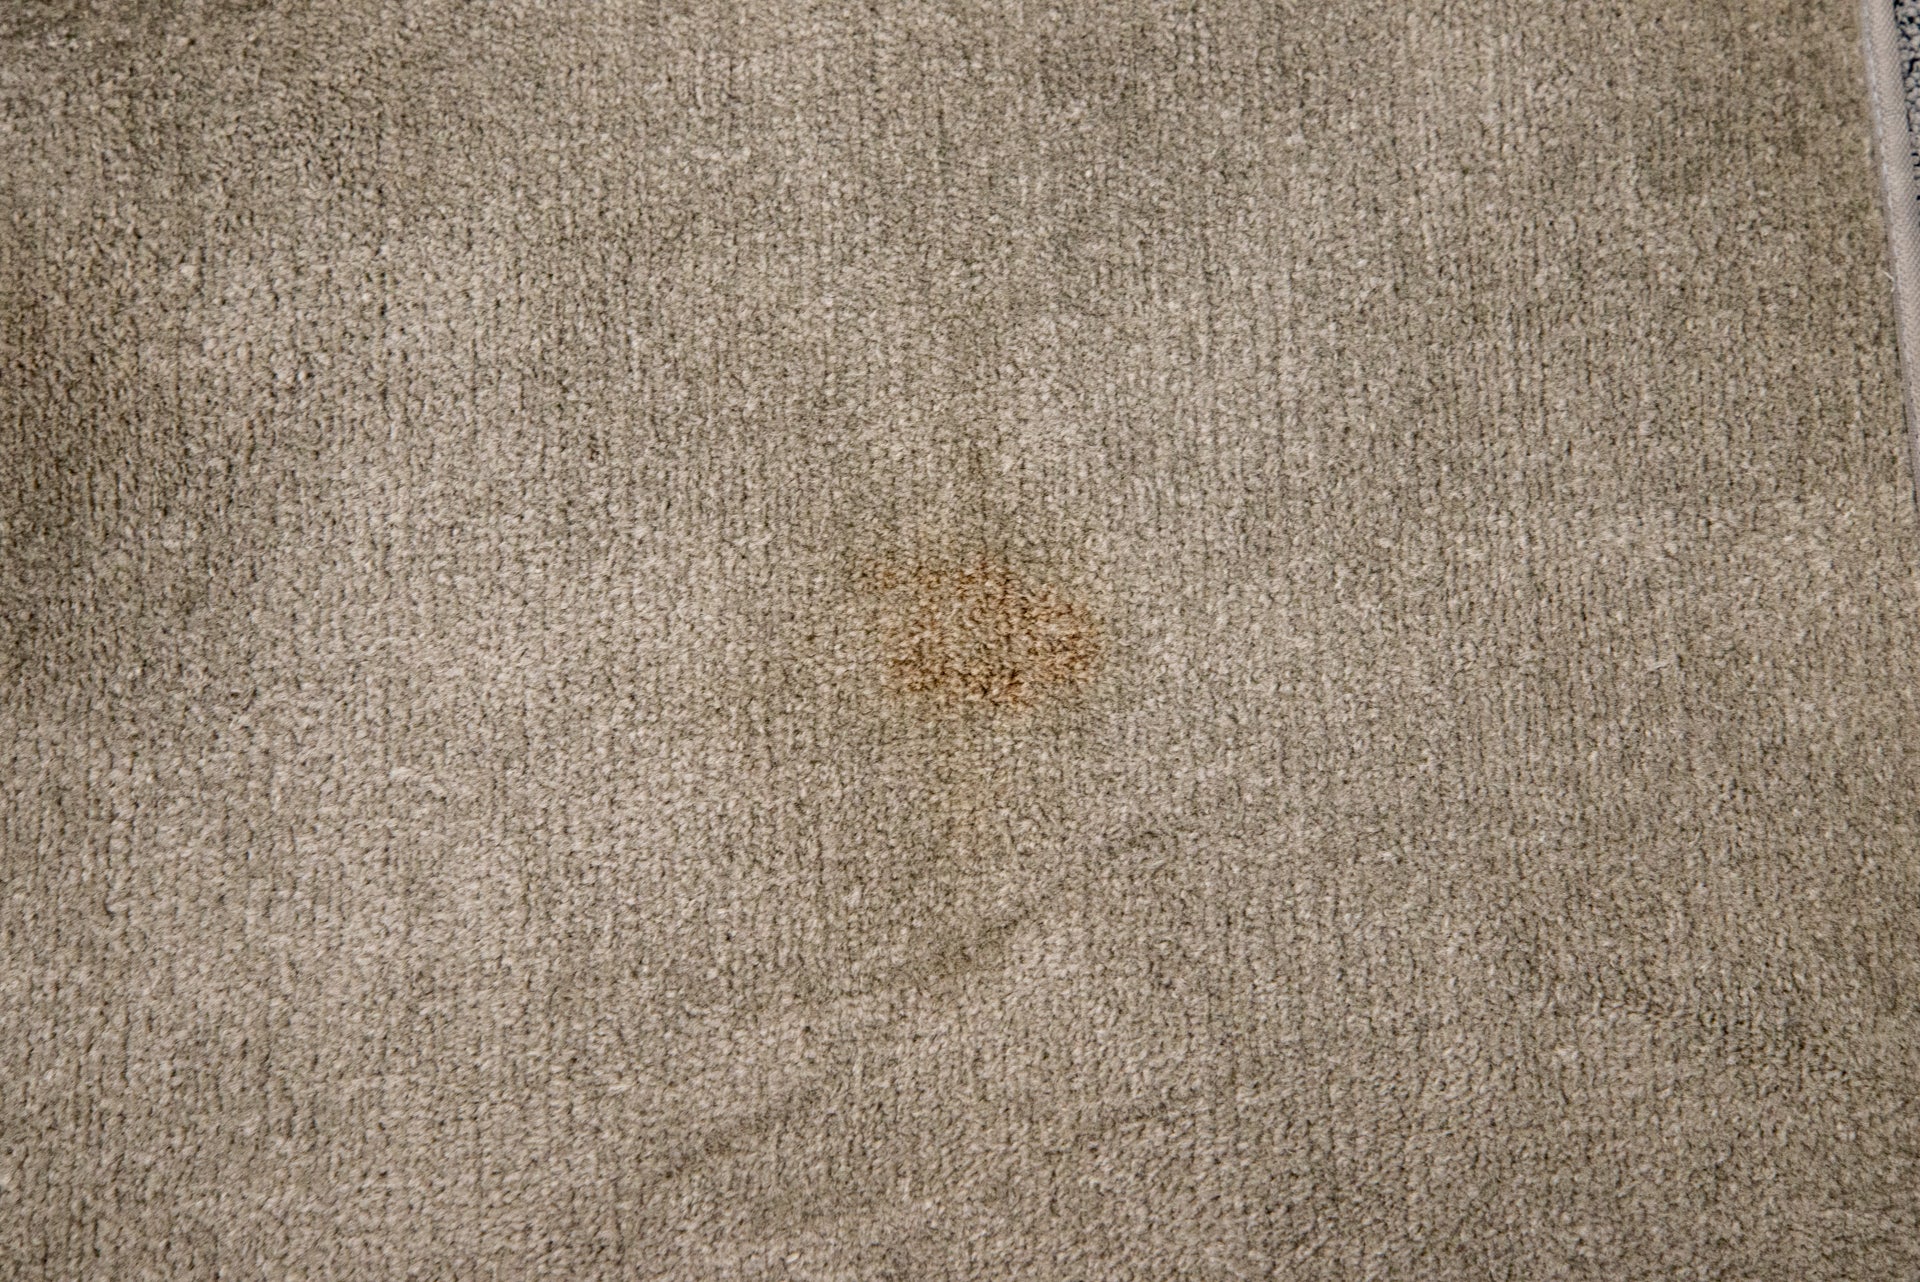 Vax Platinum SmartWash Carpet Cleaner ketchup stain after main brush